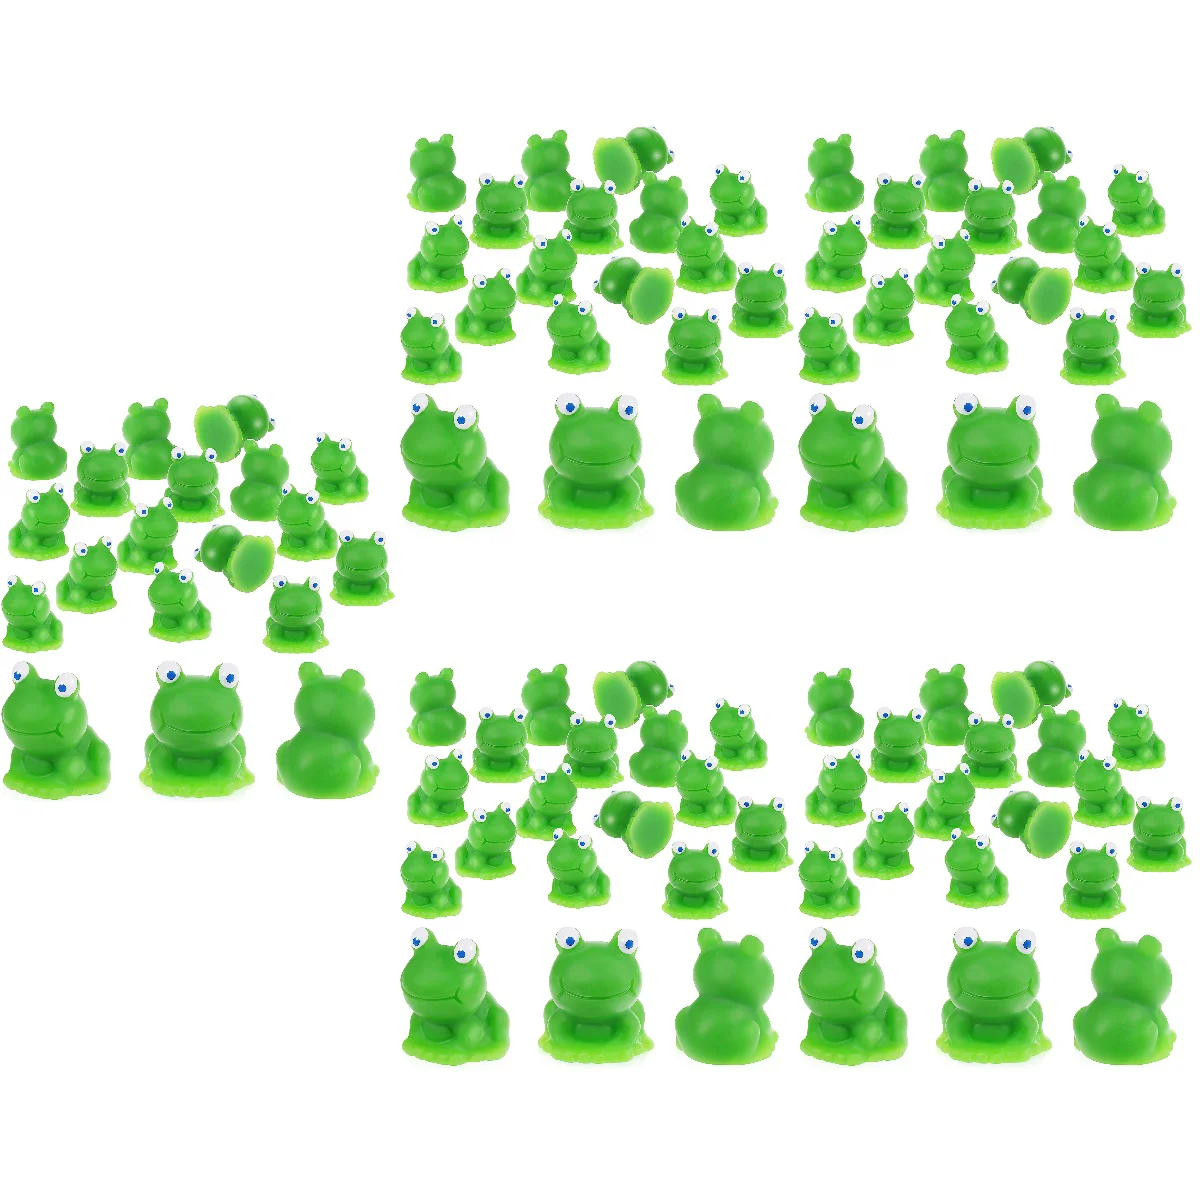 

100 Pcs Little Frog Frogs Toy Model Mini Toys Adornments Decor Miniature Landscape Statues Ornaments Decors Small Resin